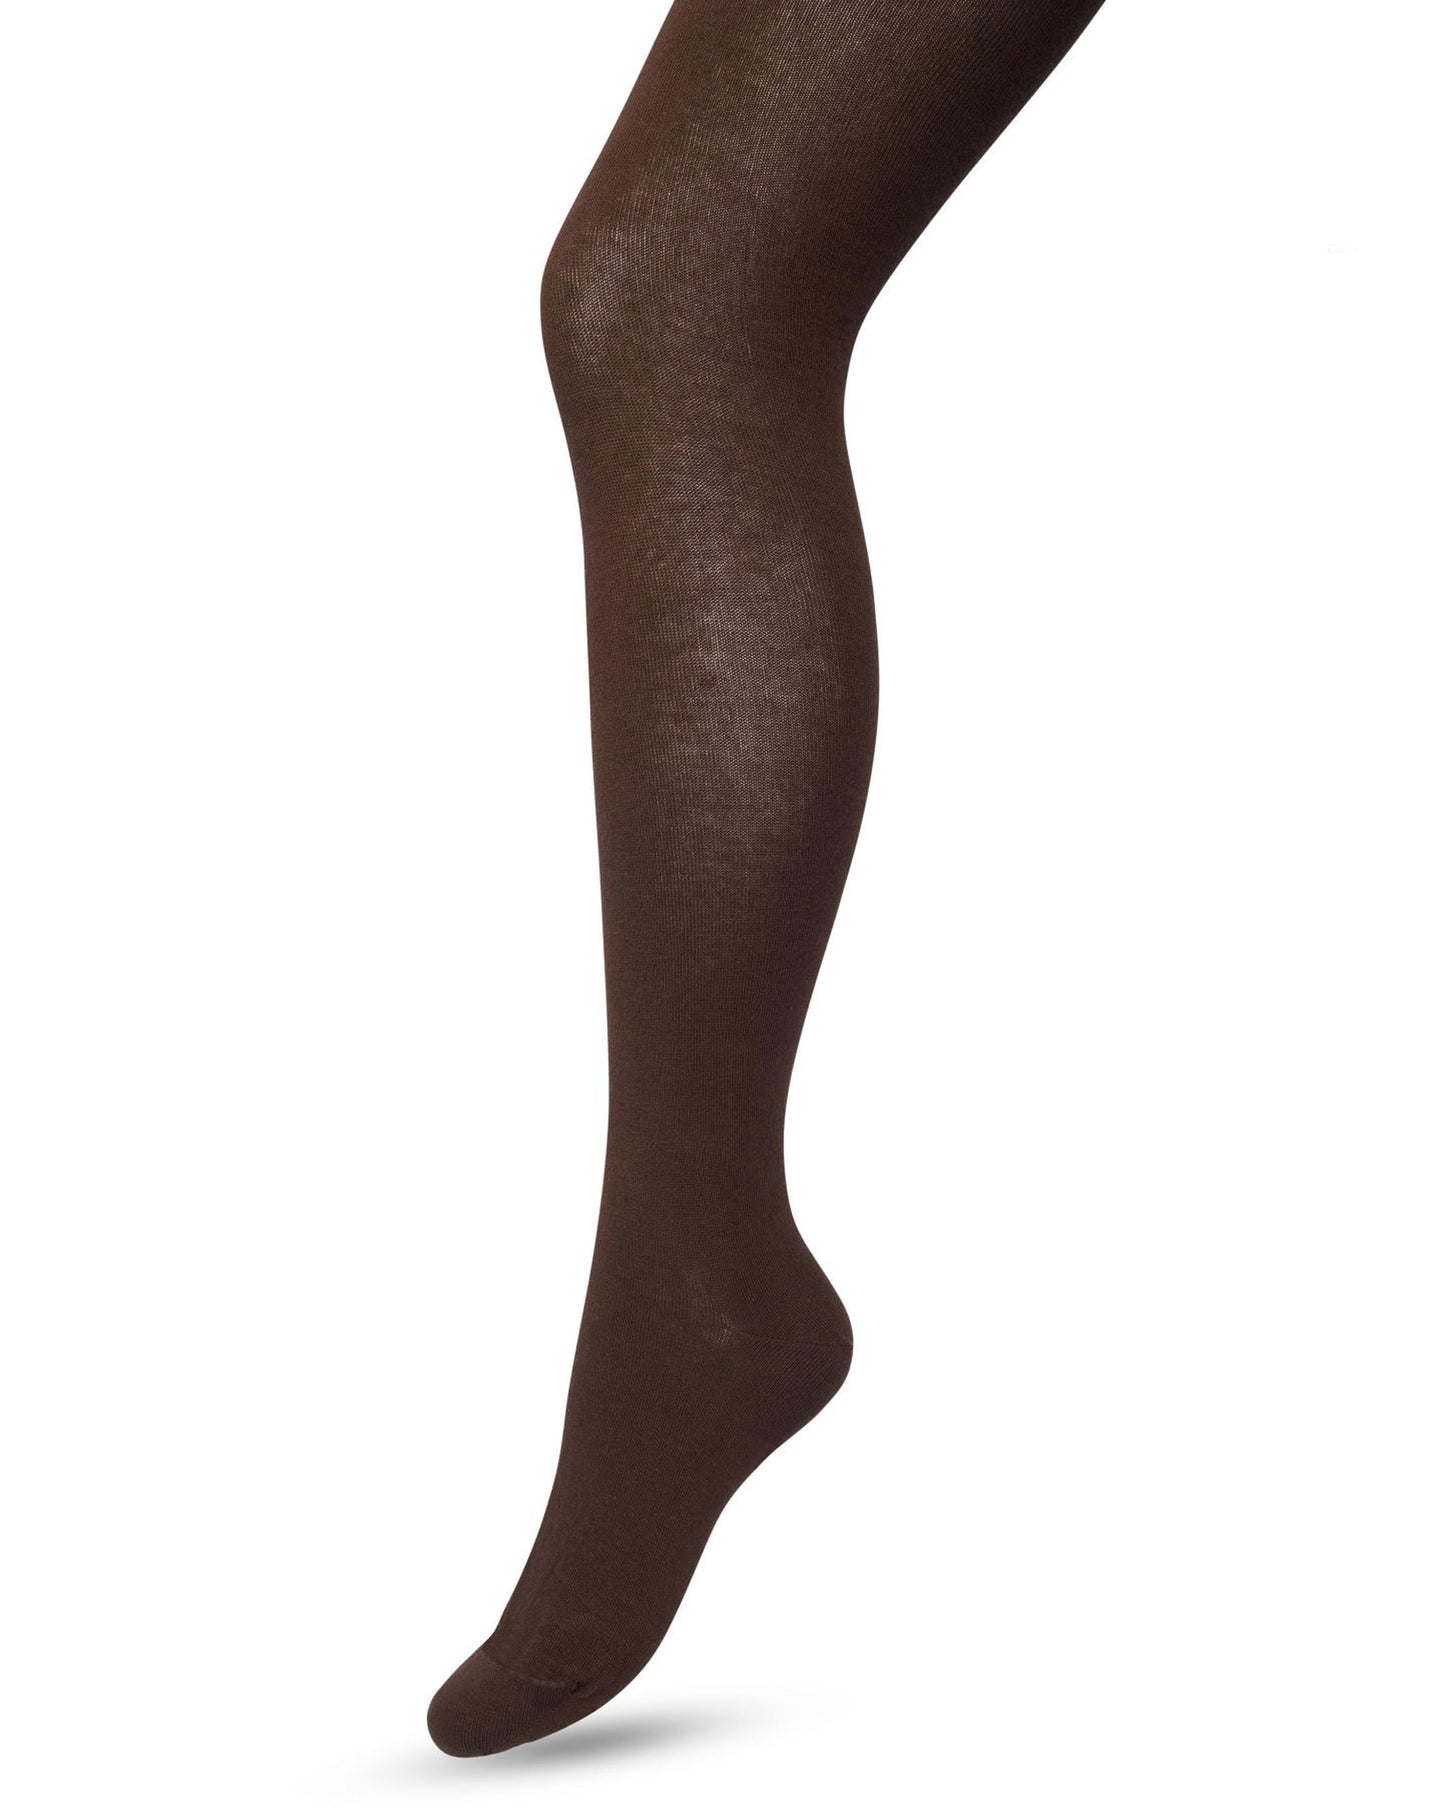 Bonnie Doon Bio Cotton Tights - Dark brown warm and soft knitted organic cotton Winter thermal tights.